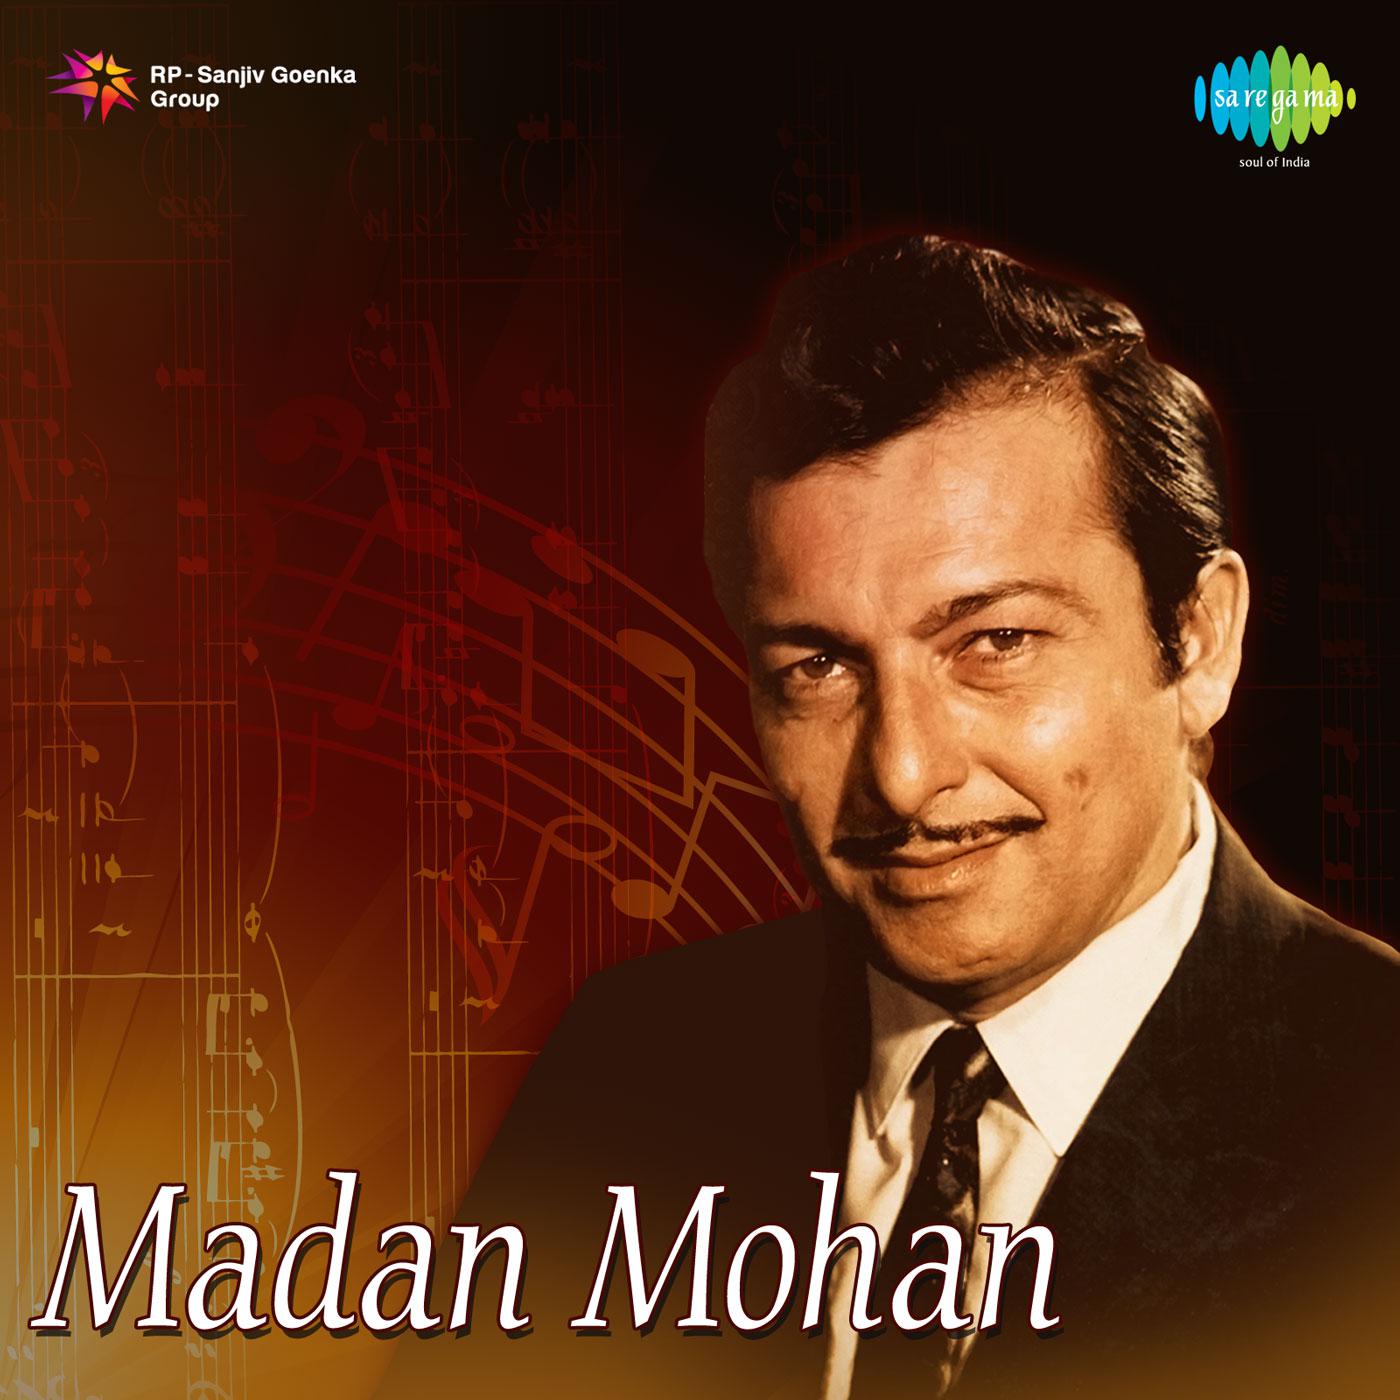 Madan Mohan